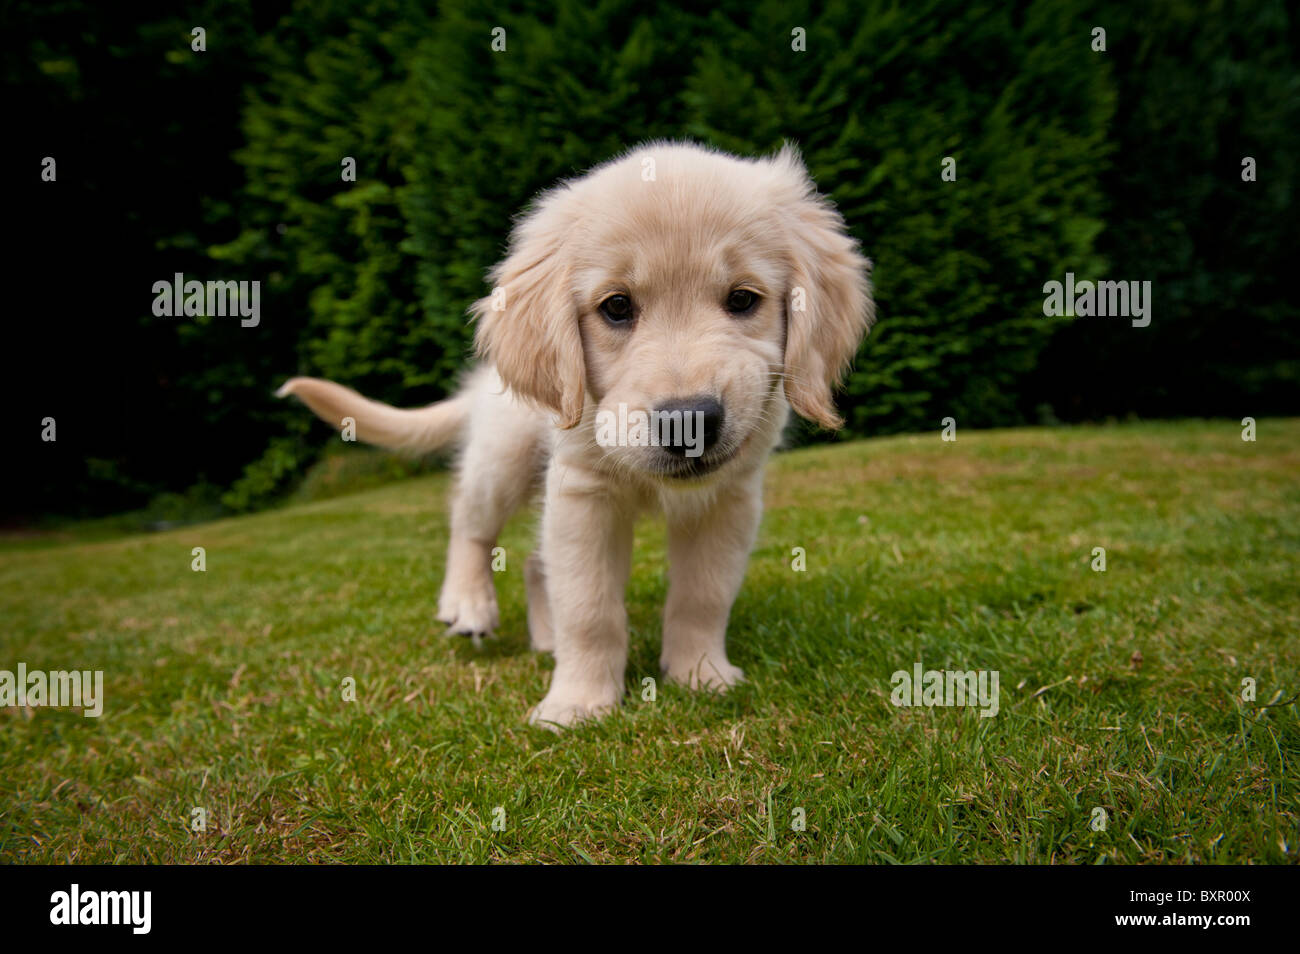 A golden retriever puppy with a cheeky grin on a garden lawn. Stock Photo